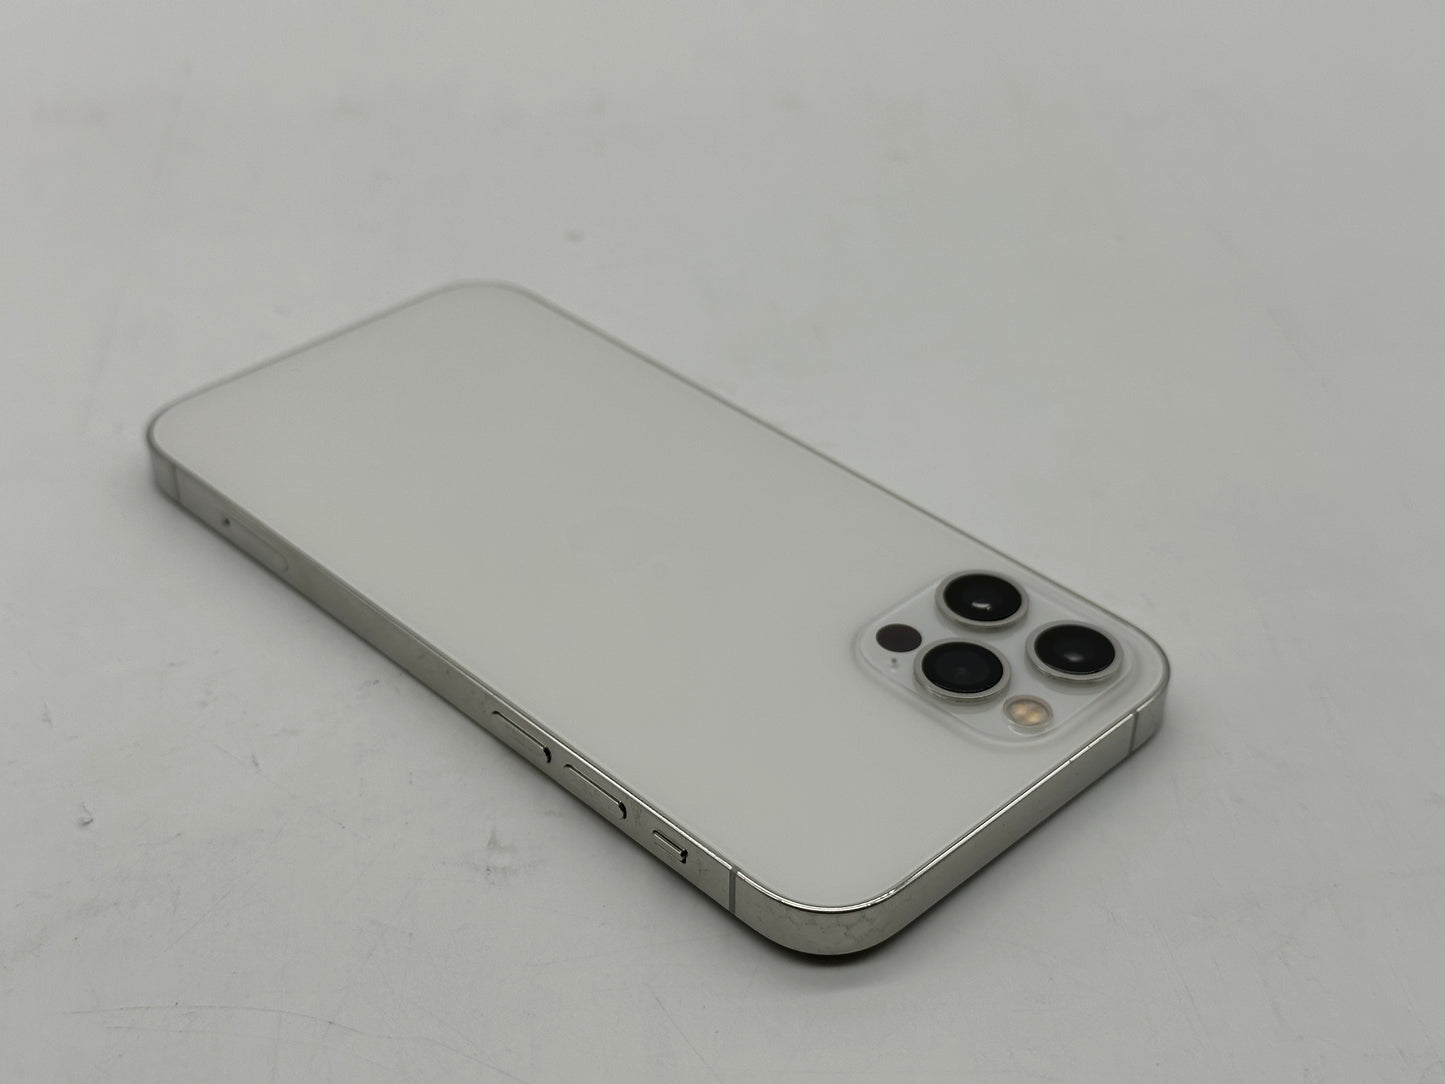 Apple iPhone 12 Pro GSM/CDMA Unlocked 256GB "Silver"